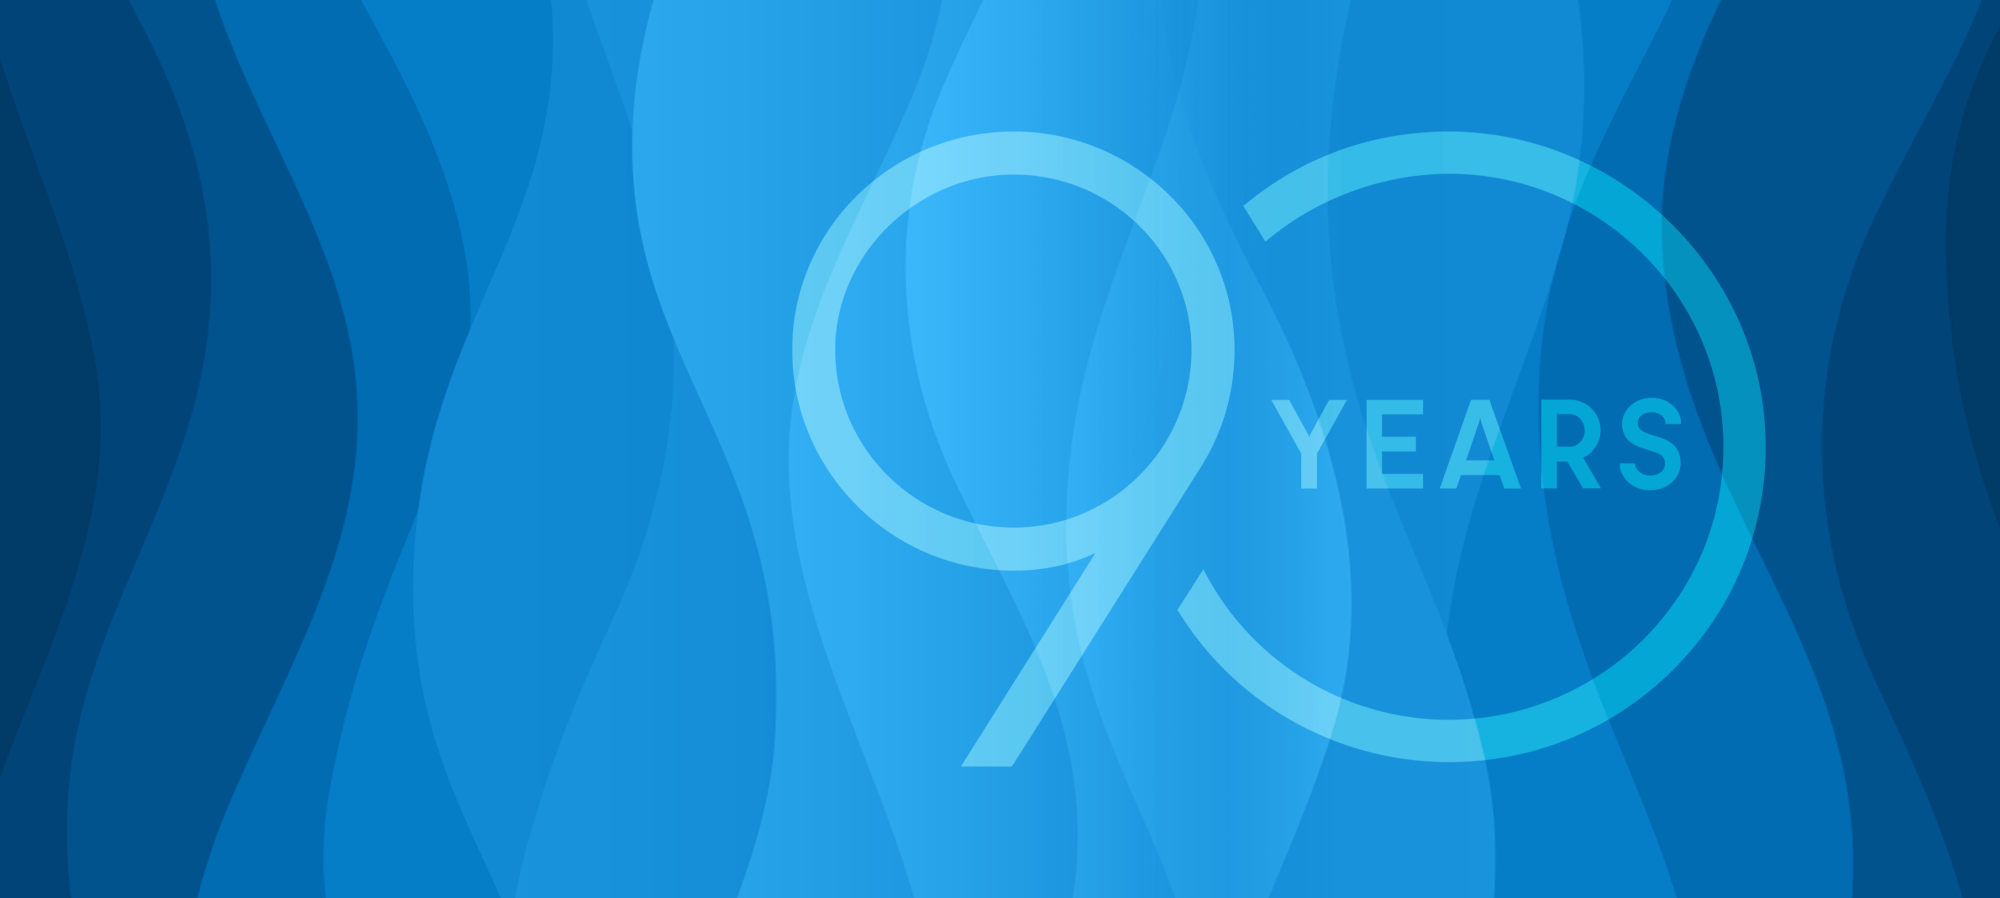 EEI 90 years logo on blue background